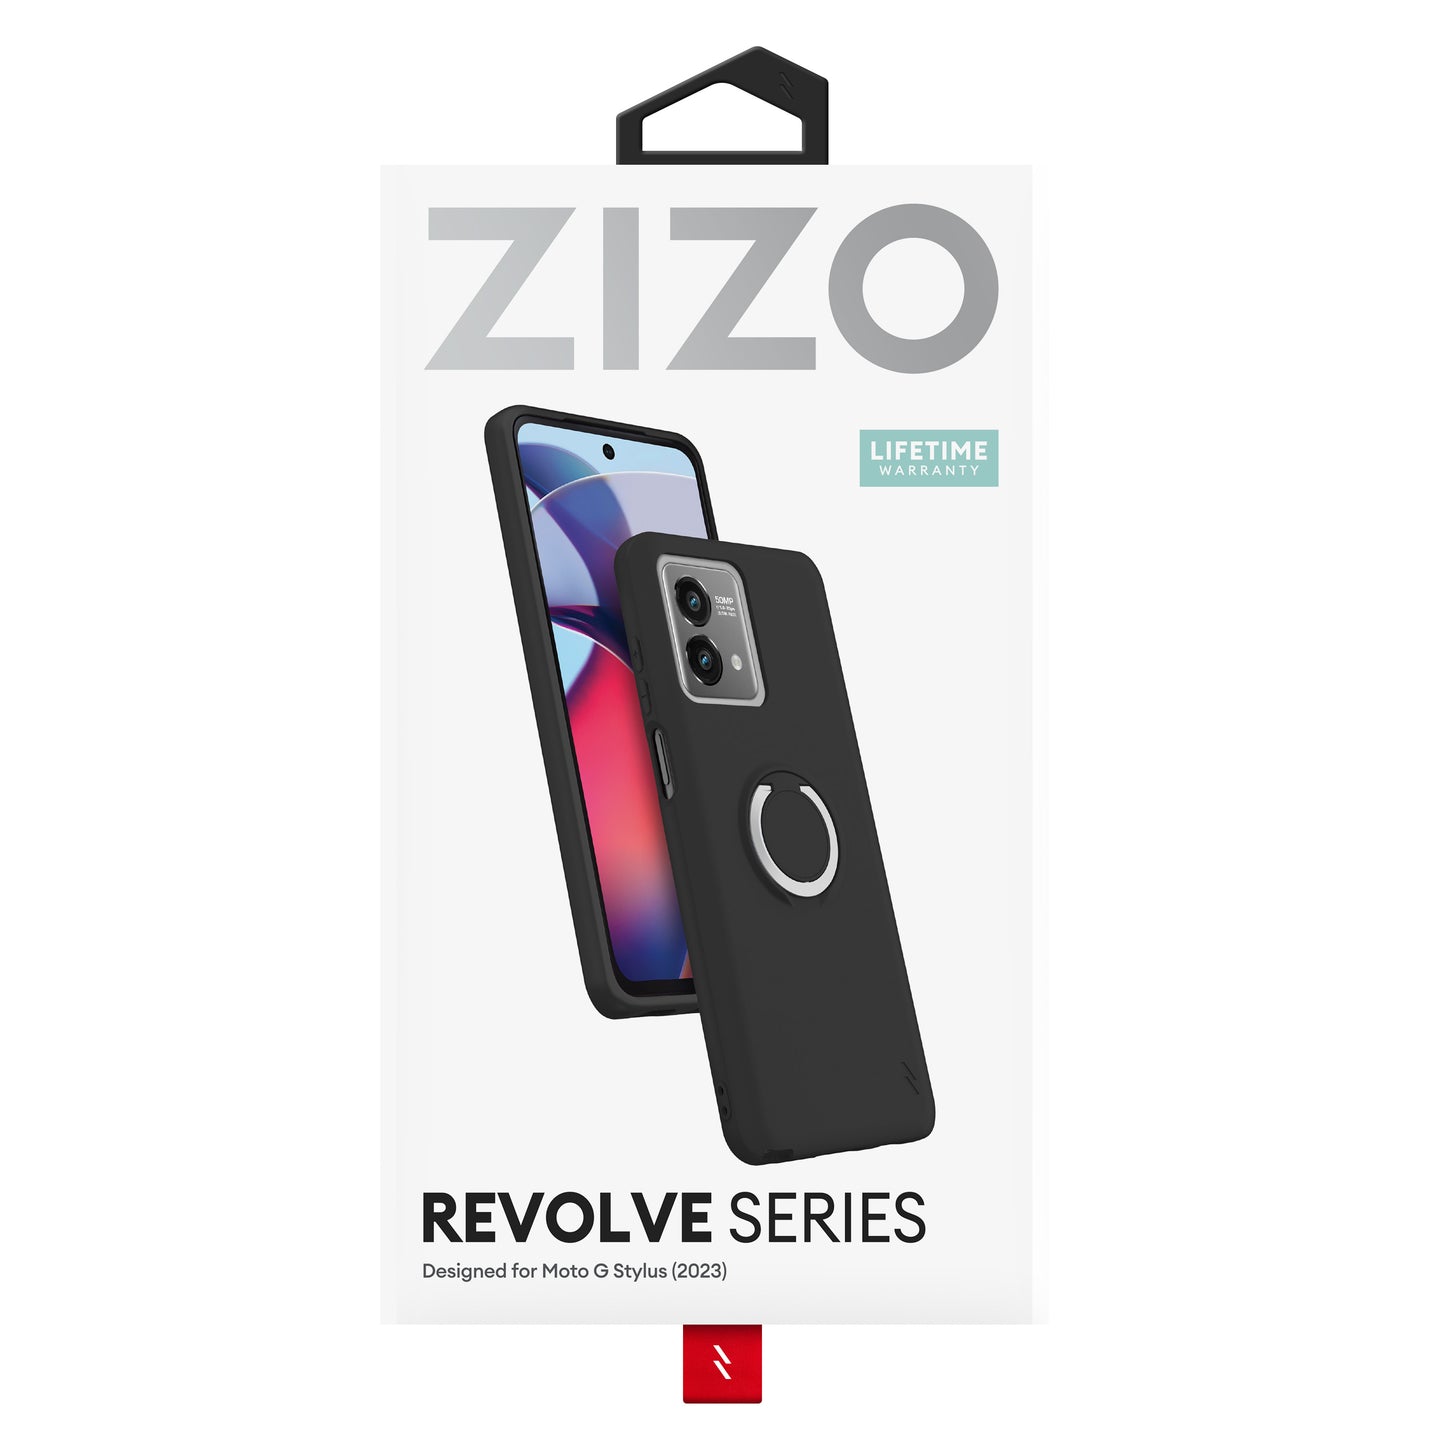 ZIZO REVOLVE Series moto g stylus (2023) Case - Black